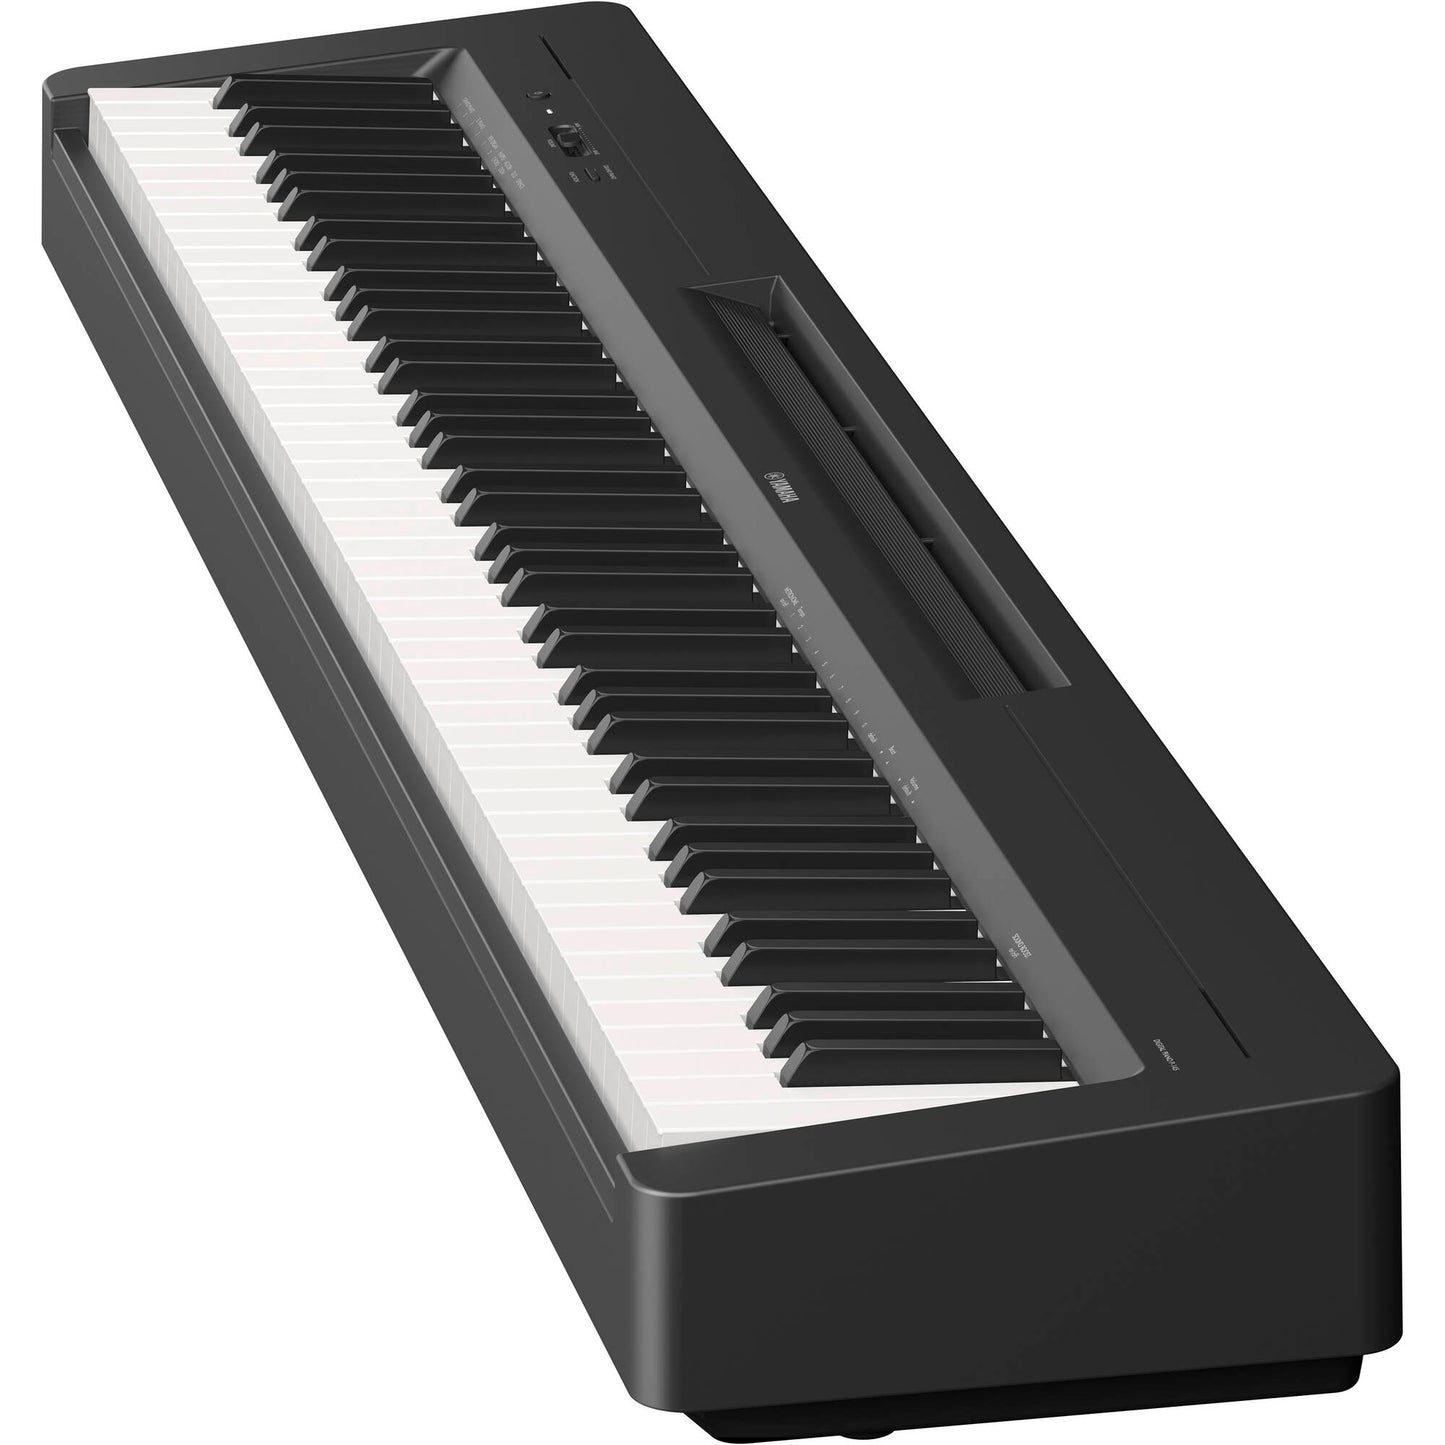 P-145 Black Piano digital portatil Yamaha